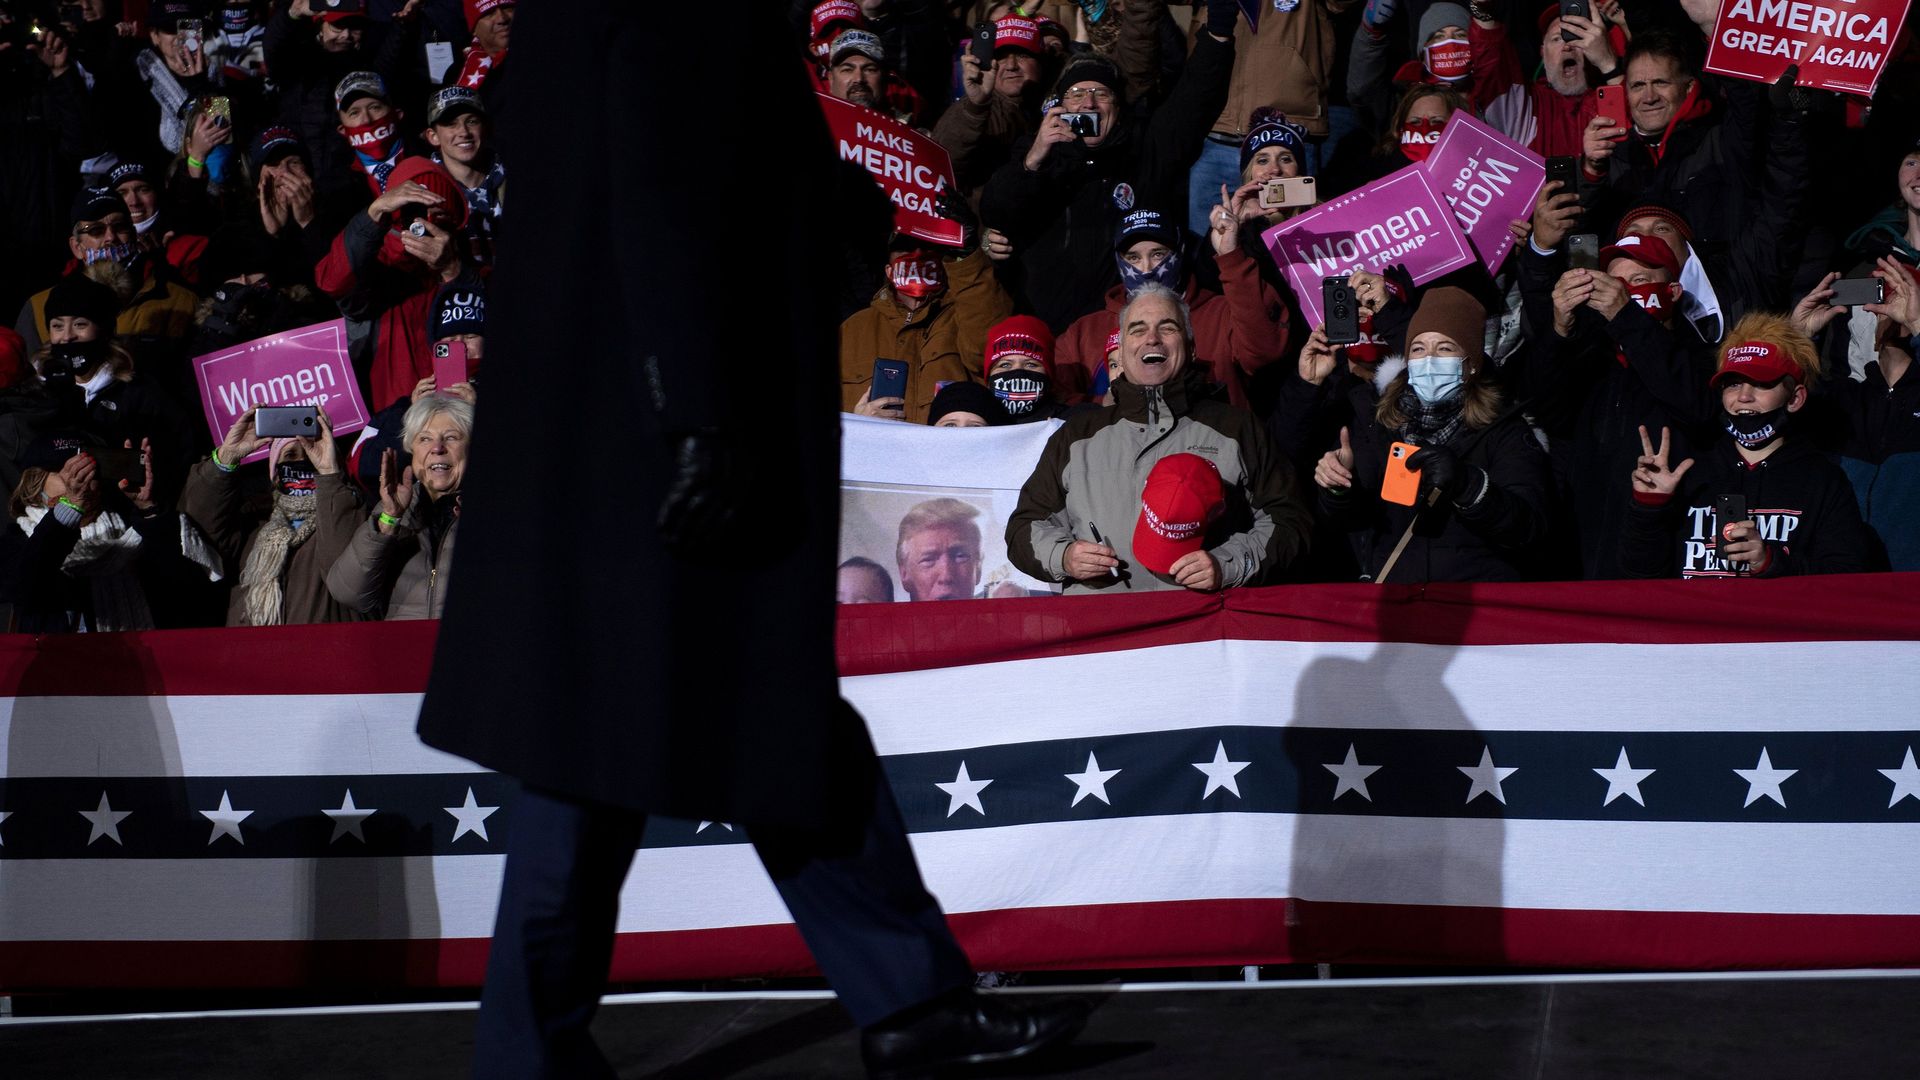 Trump's silhouette walks by a crowd 